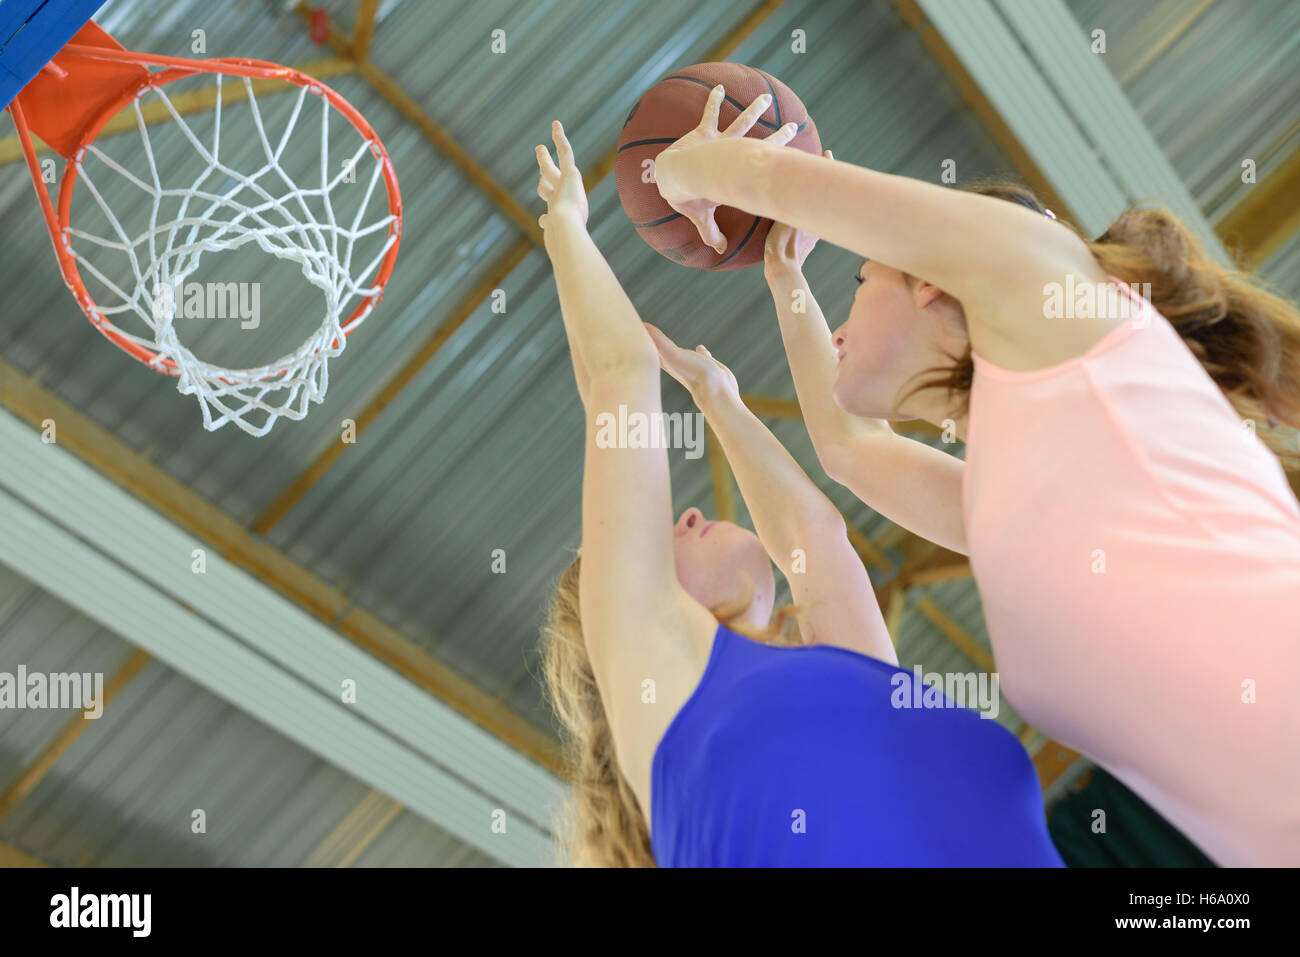 Woman aiming towards basketball net Stock Photo